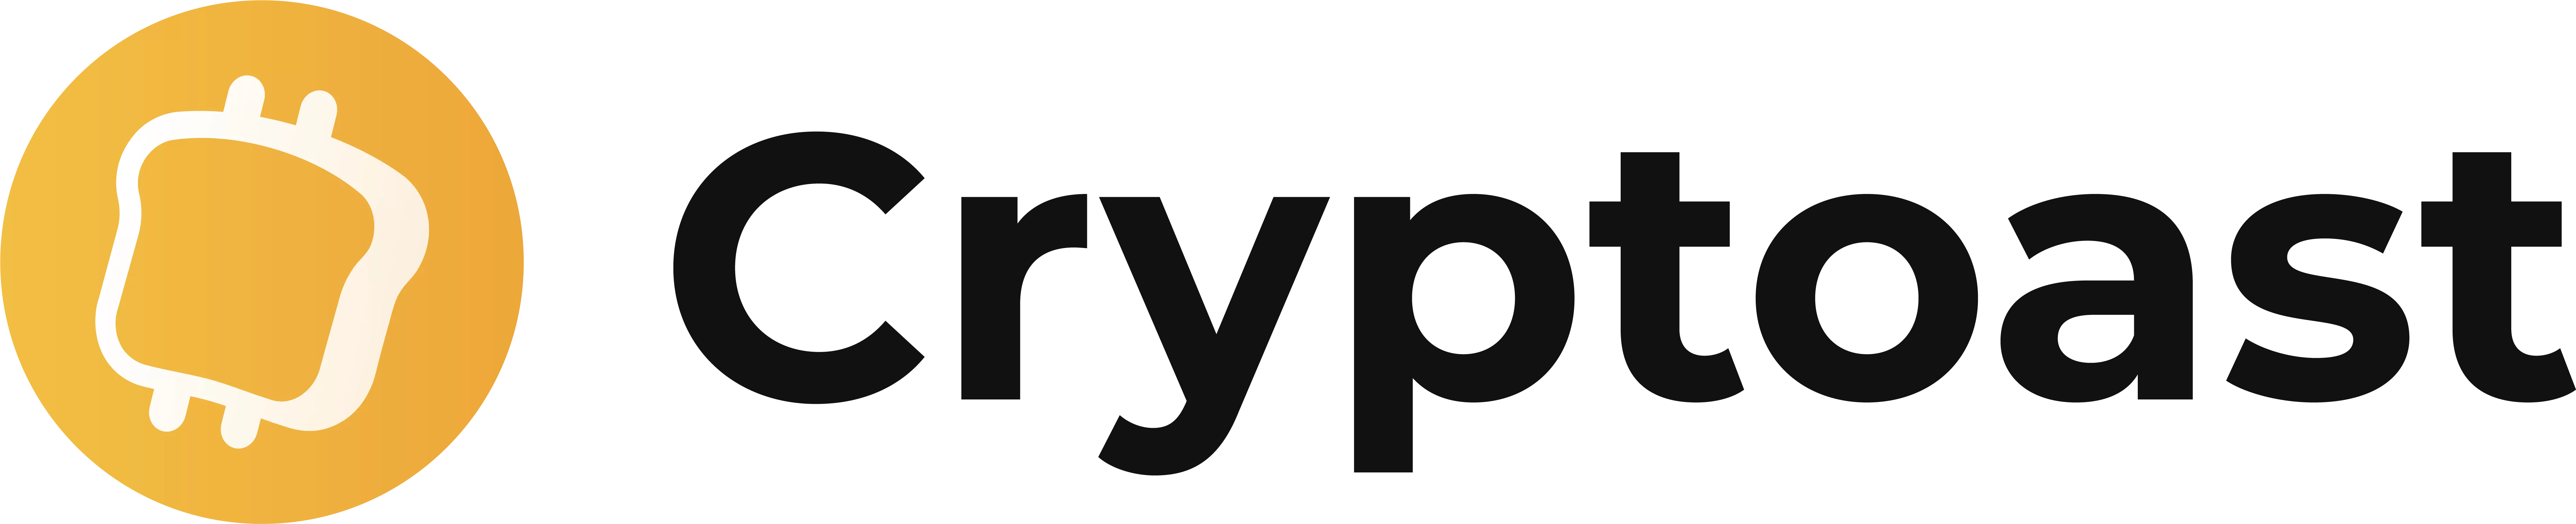 Cryptoast Logo Texte